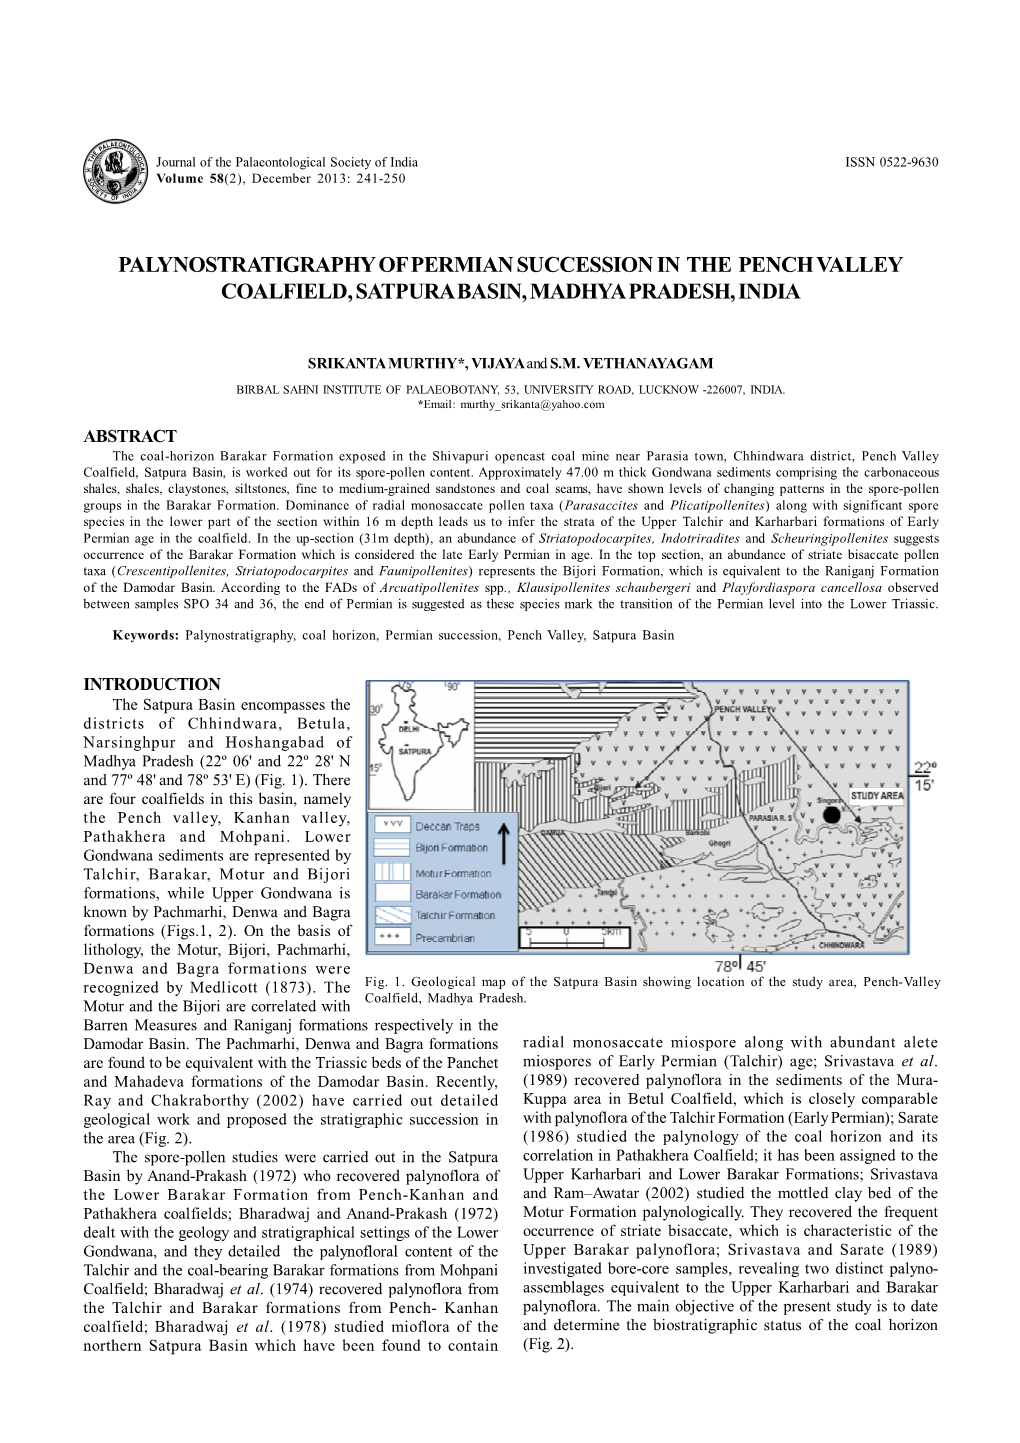 Palynostratigraphy of Permian Succession in the Pench Valley Coalfield, Satpura Basin, Madhya Pradesh, India